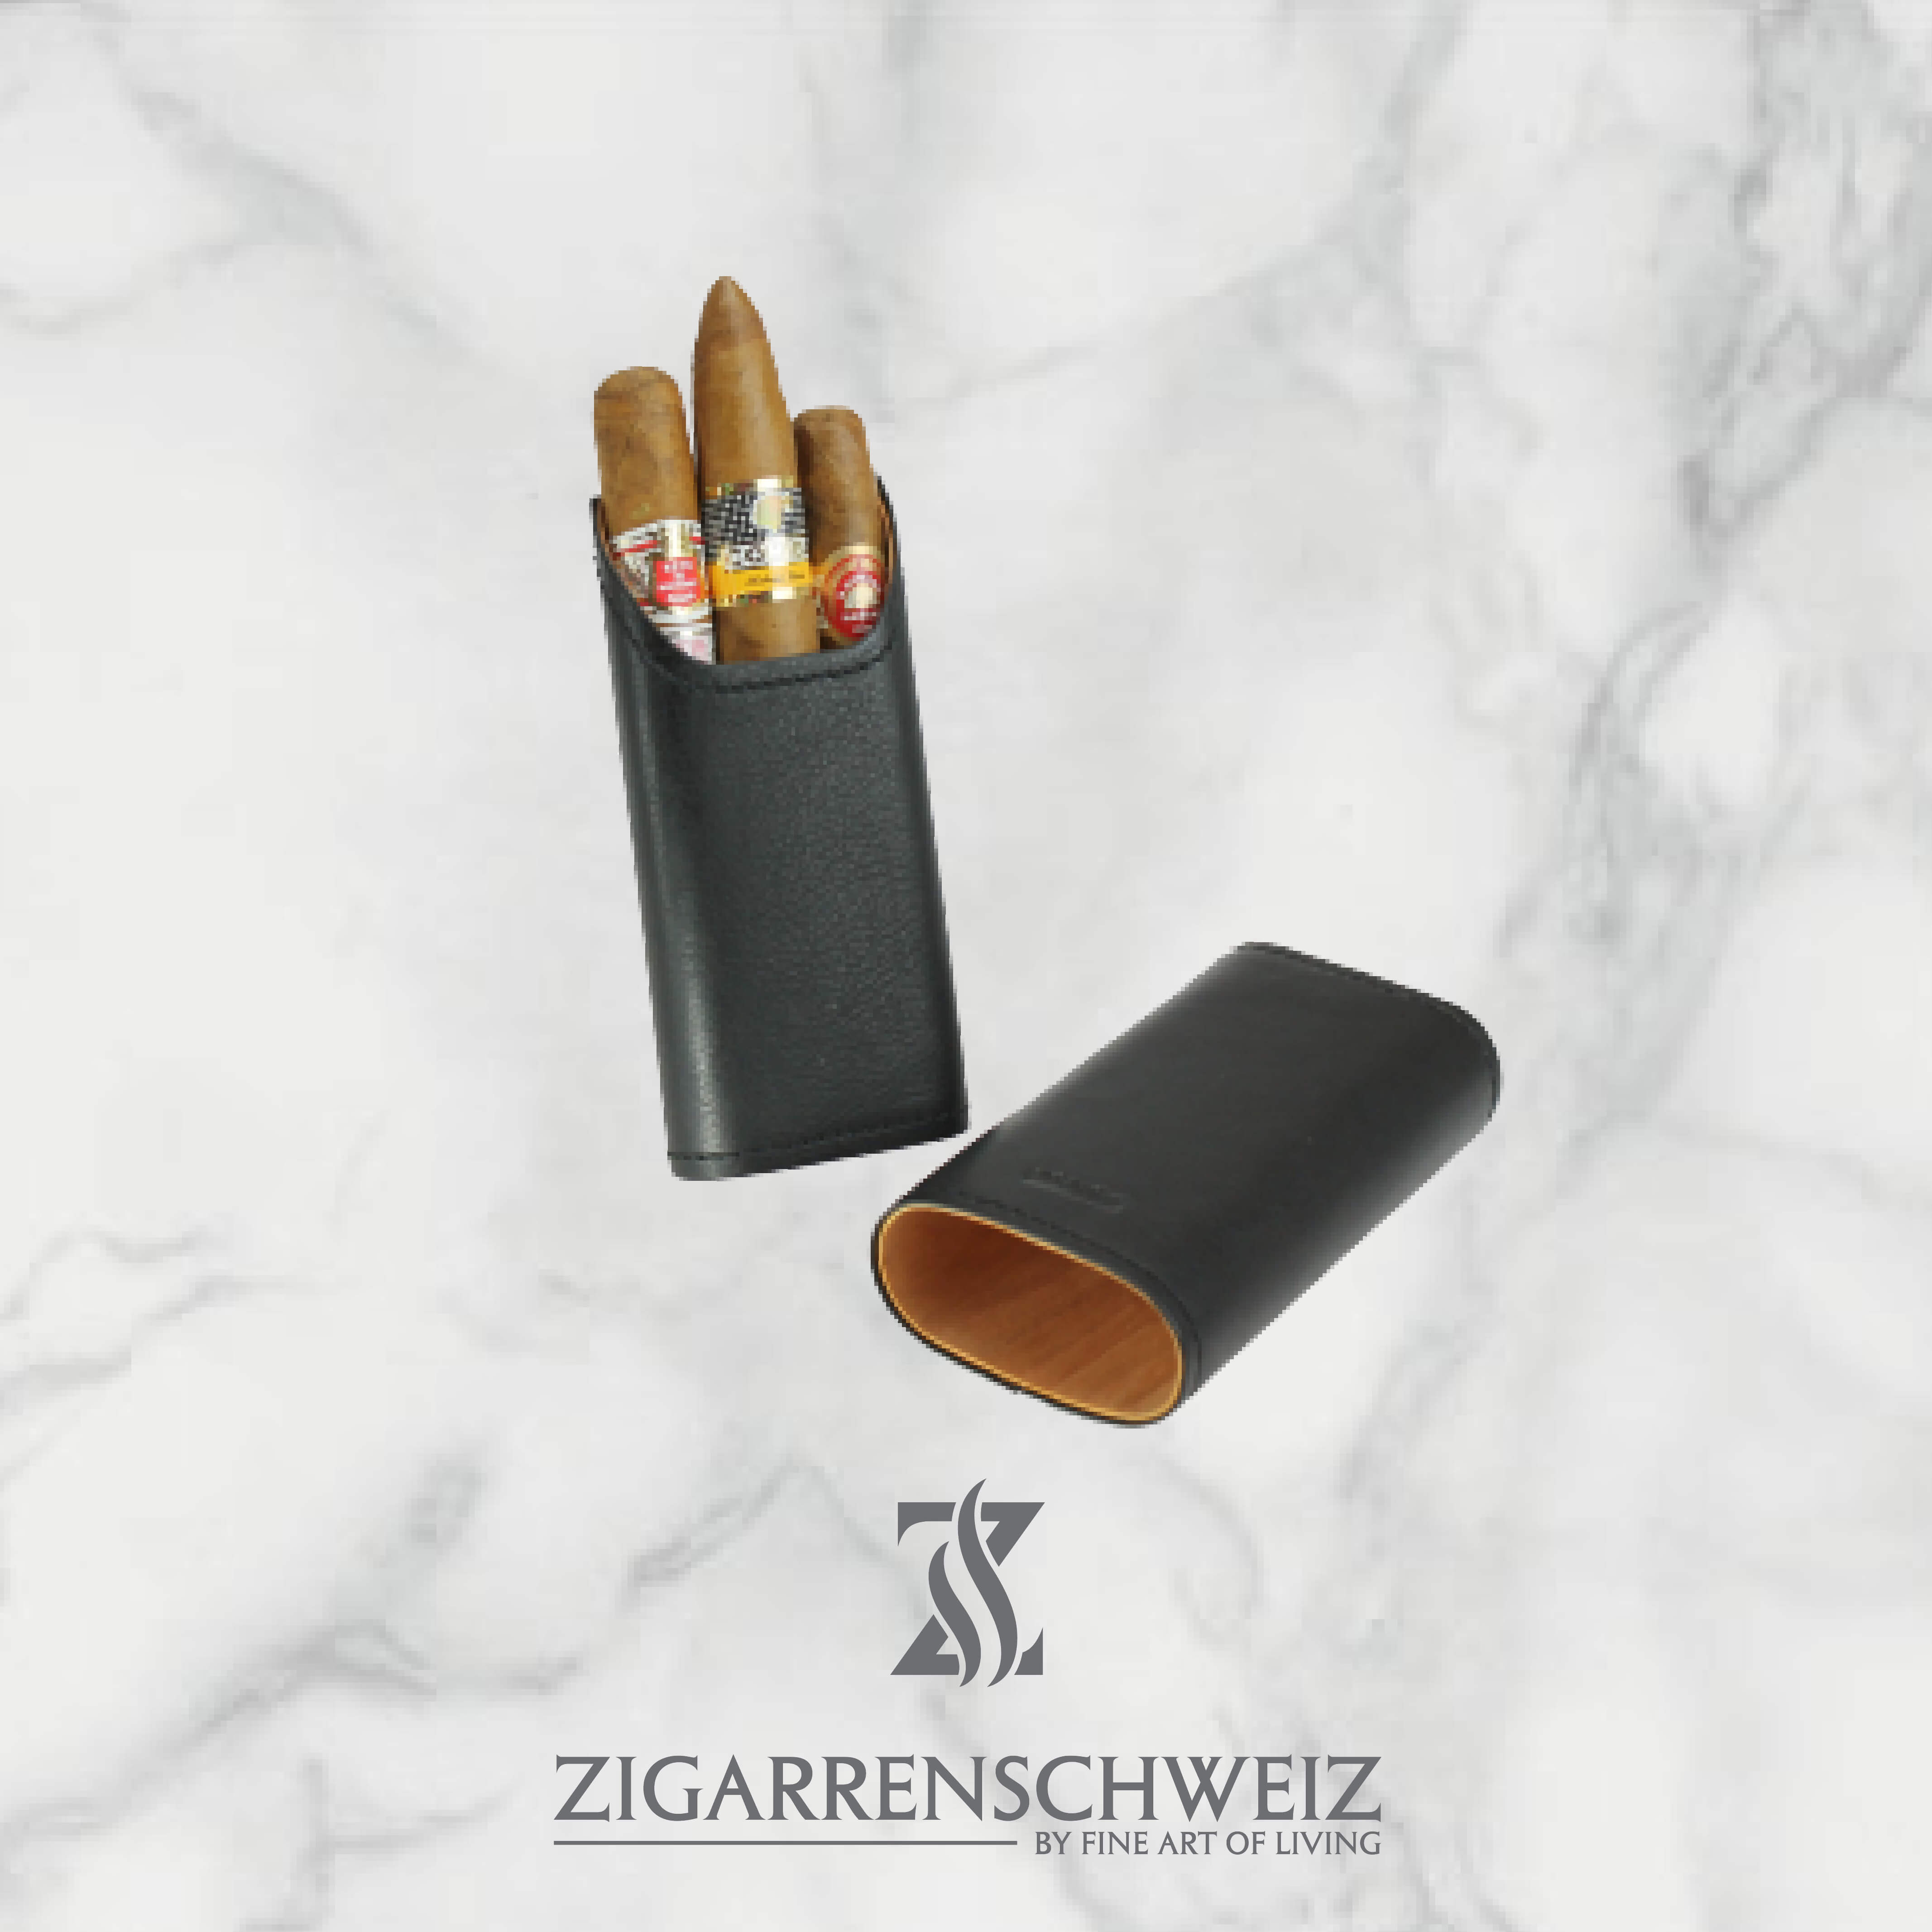 Adorini Zigarrenetui, Material: Echtleder, Kapazität: 2-3 Zigarren, Farbe: schwarz, geöffnet